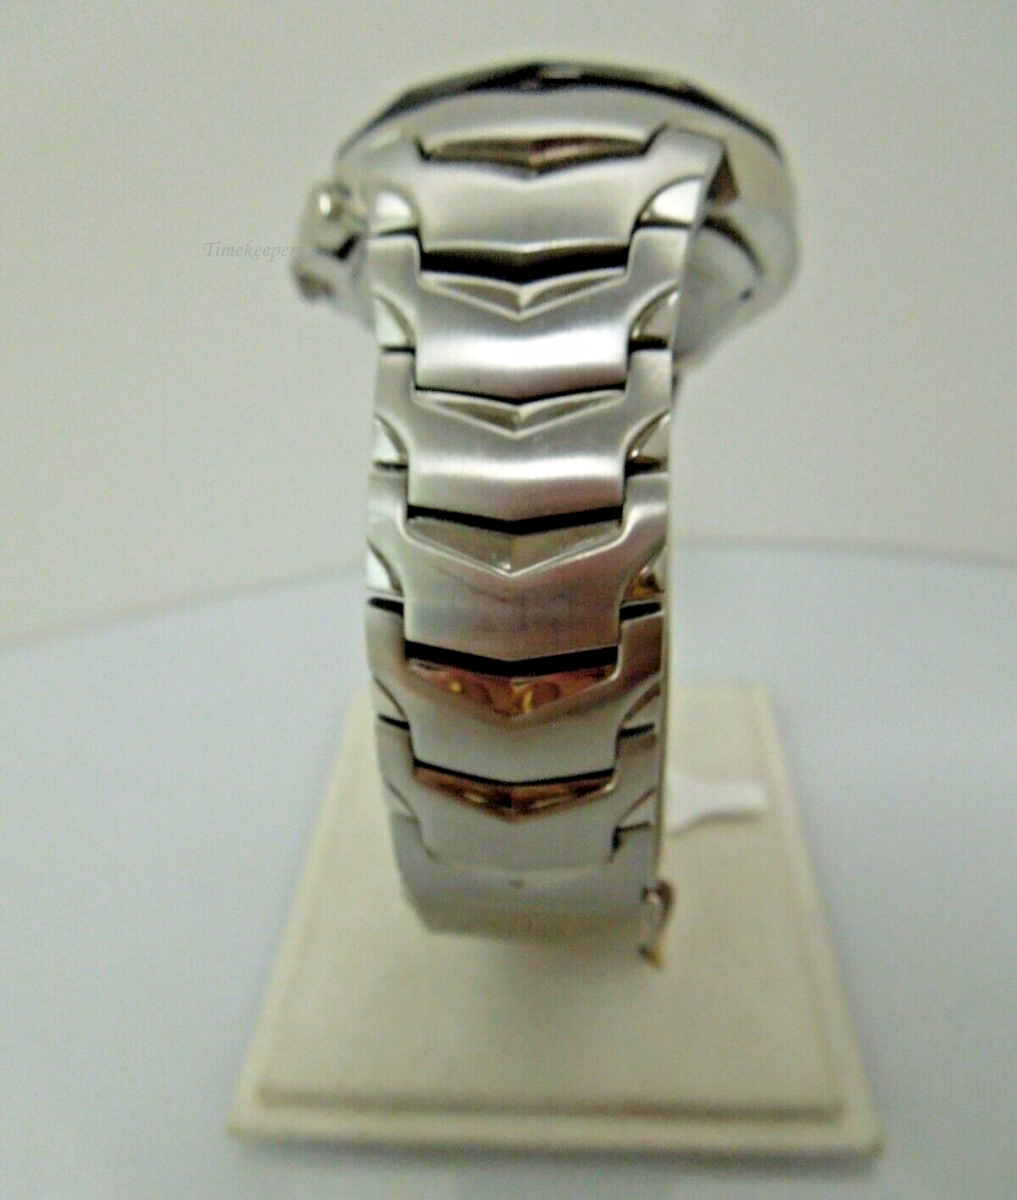 t053 Seiko Men's Stainless Steel Solar Chronograph Coutura Bracelet Watch